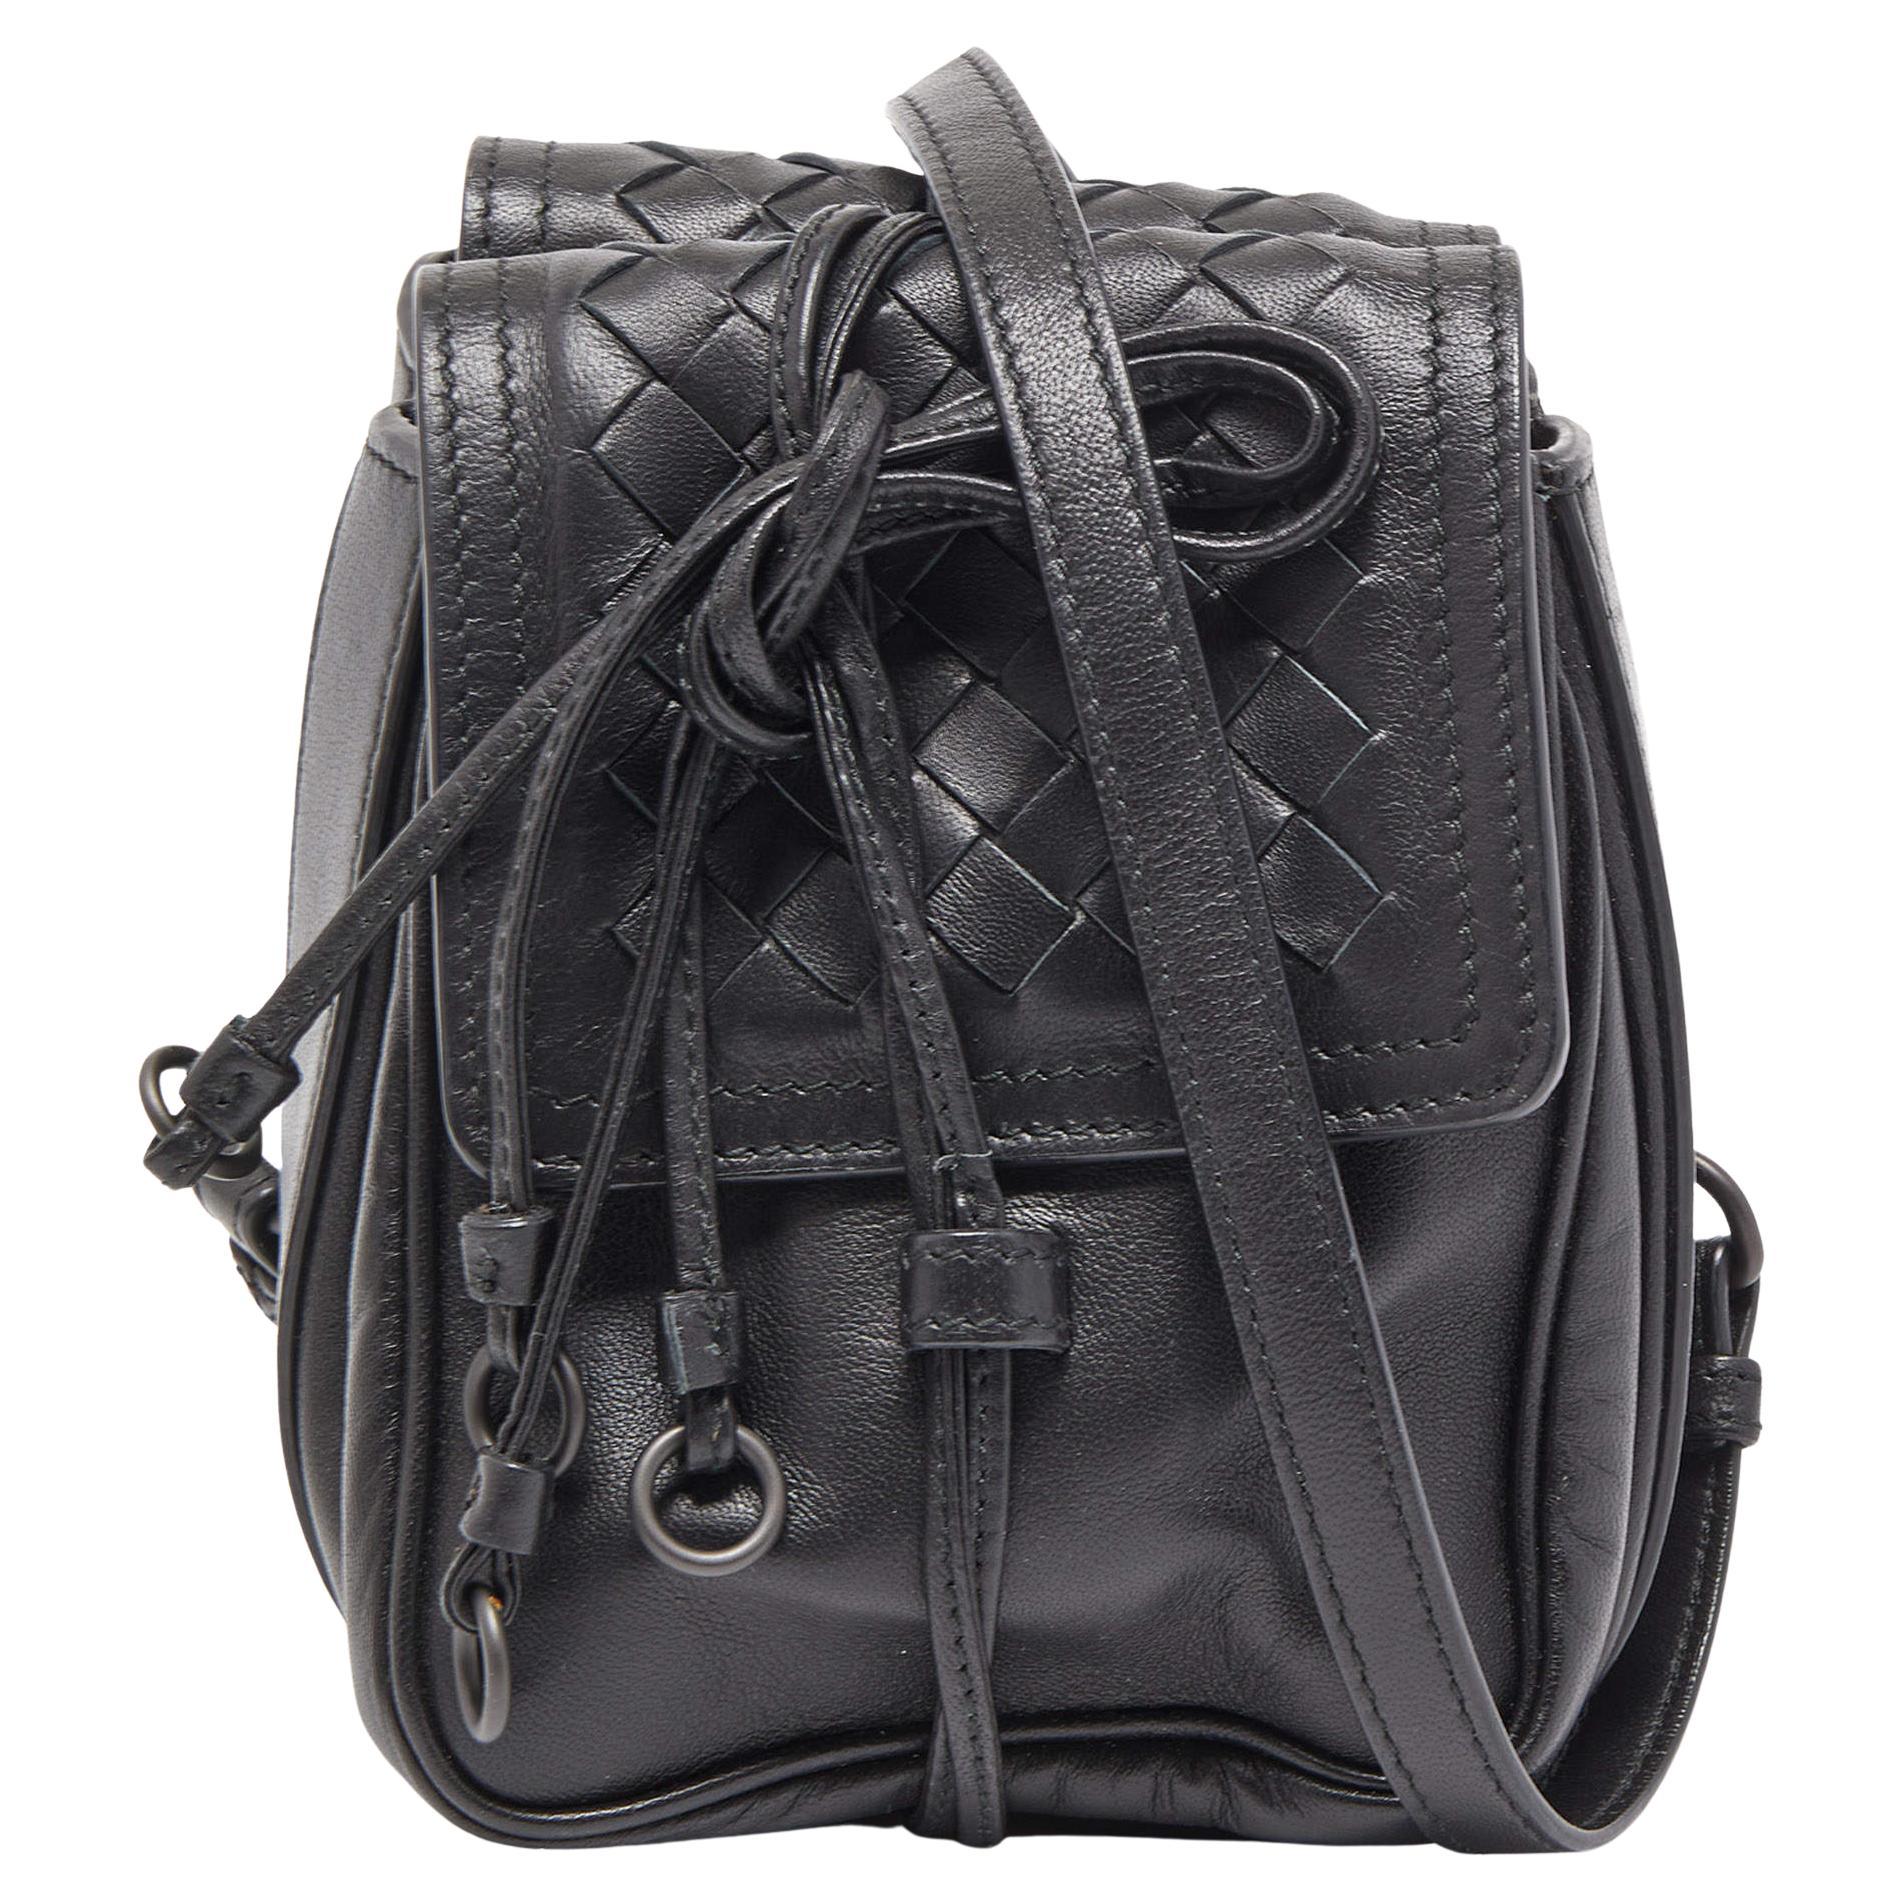 Chanel Auth Chanel Women's Leather Shoulder Bag Black